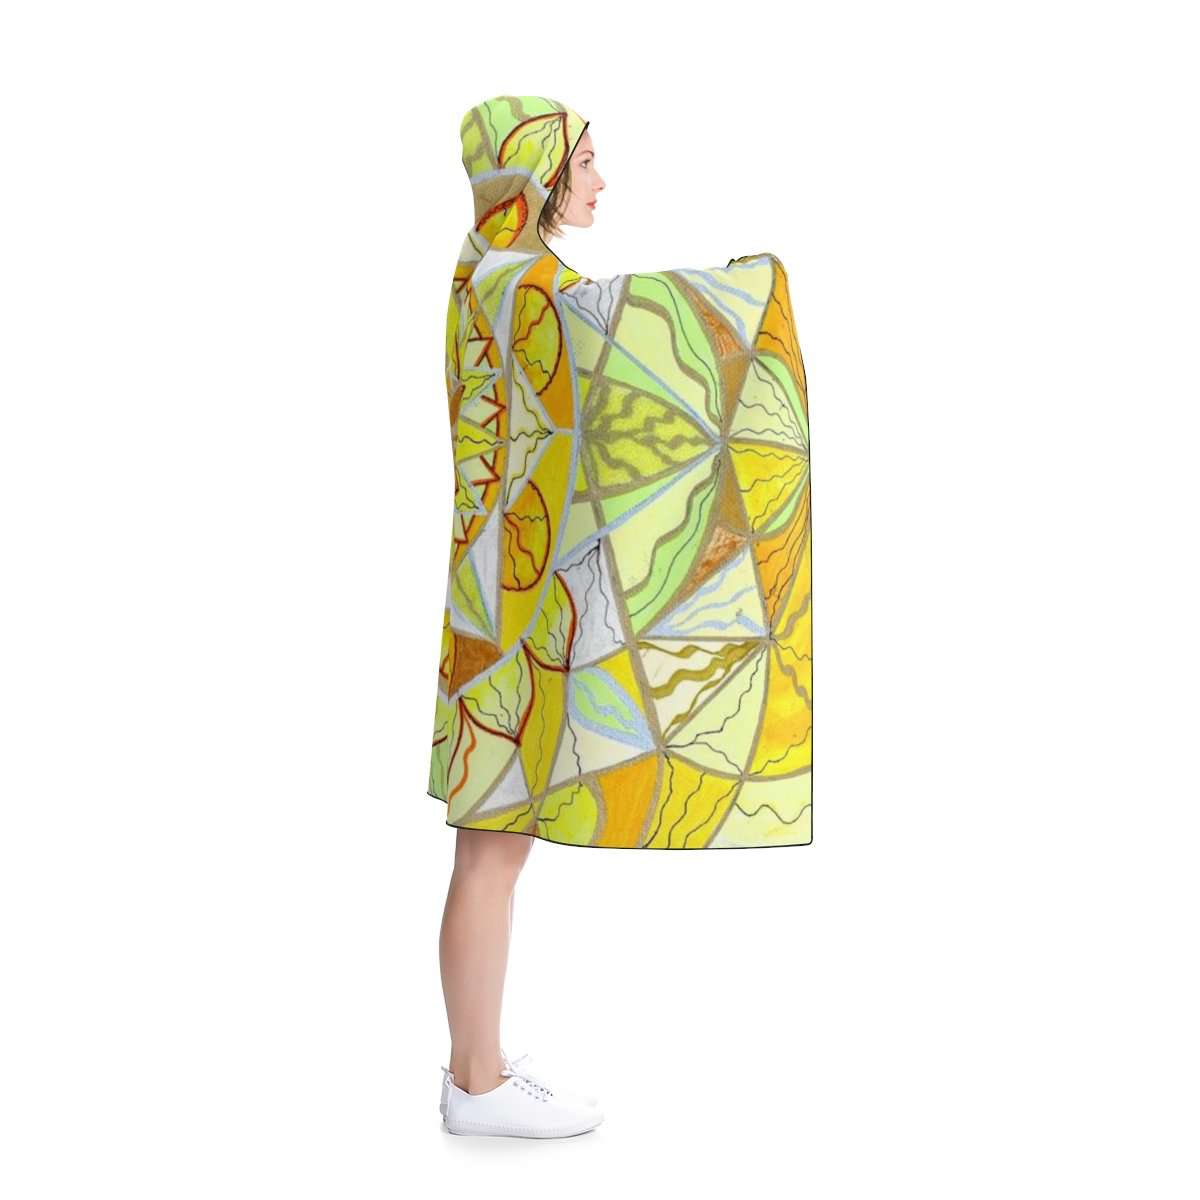 purchase-joy-hooded-blanket-online-hot-sale_2.jpg